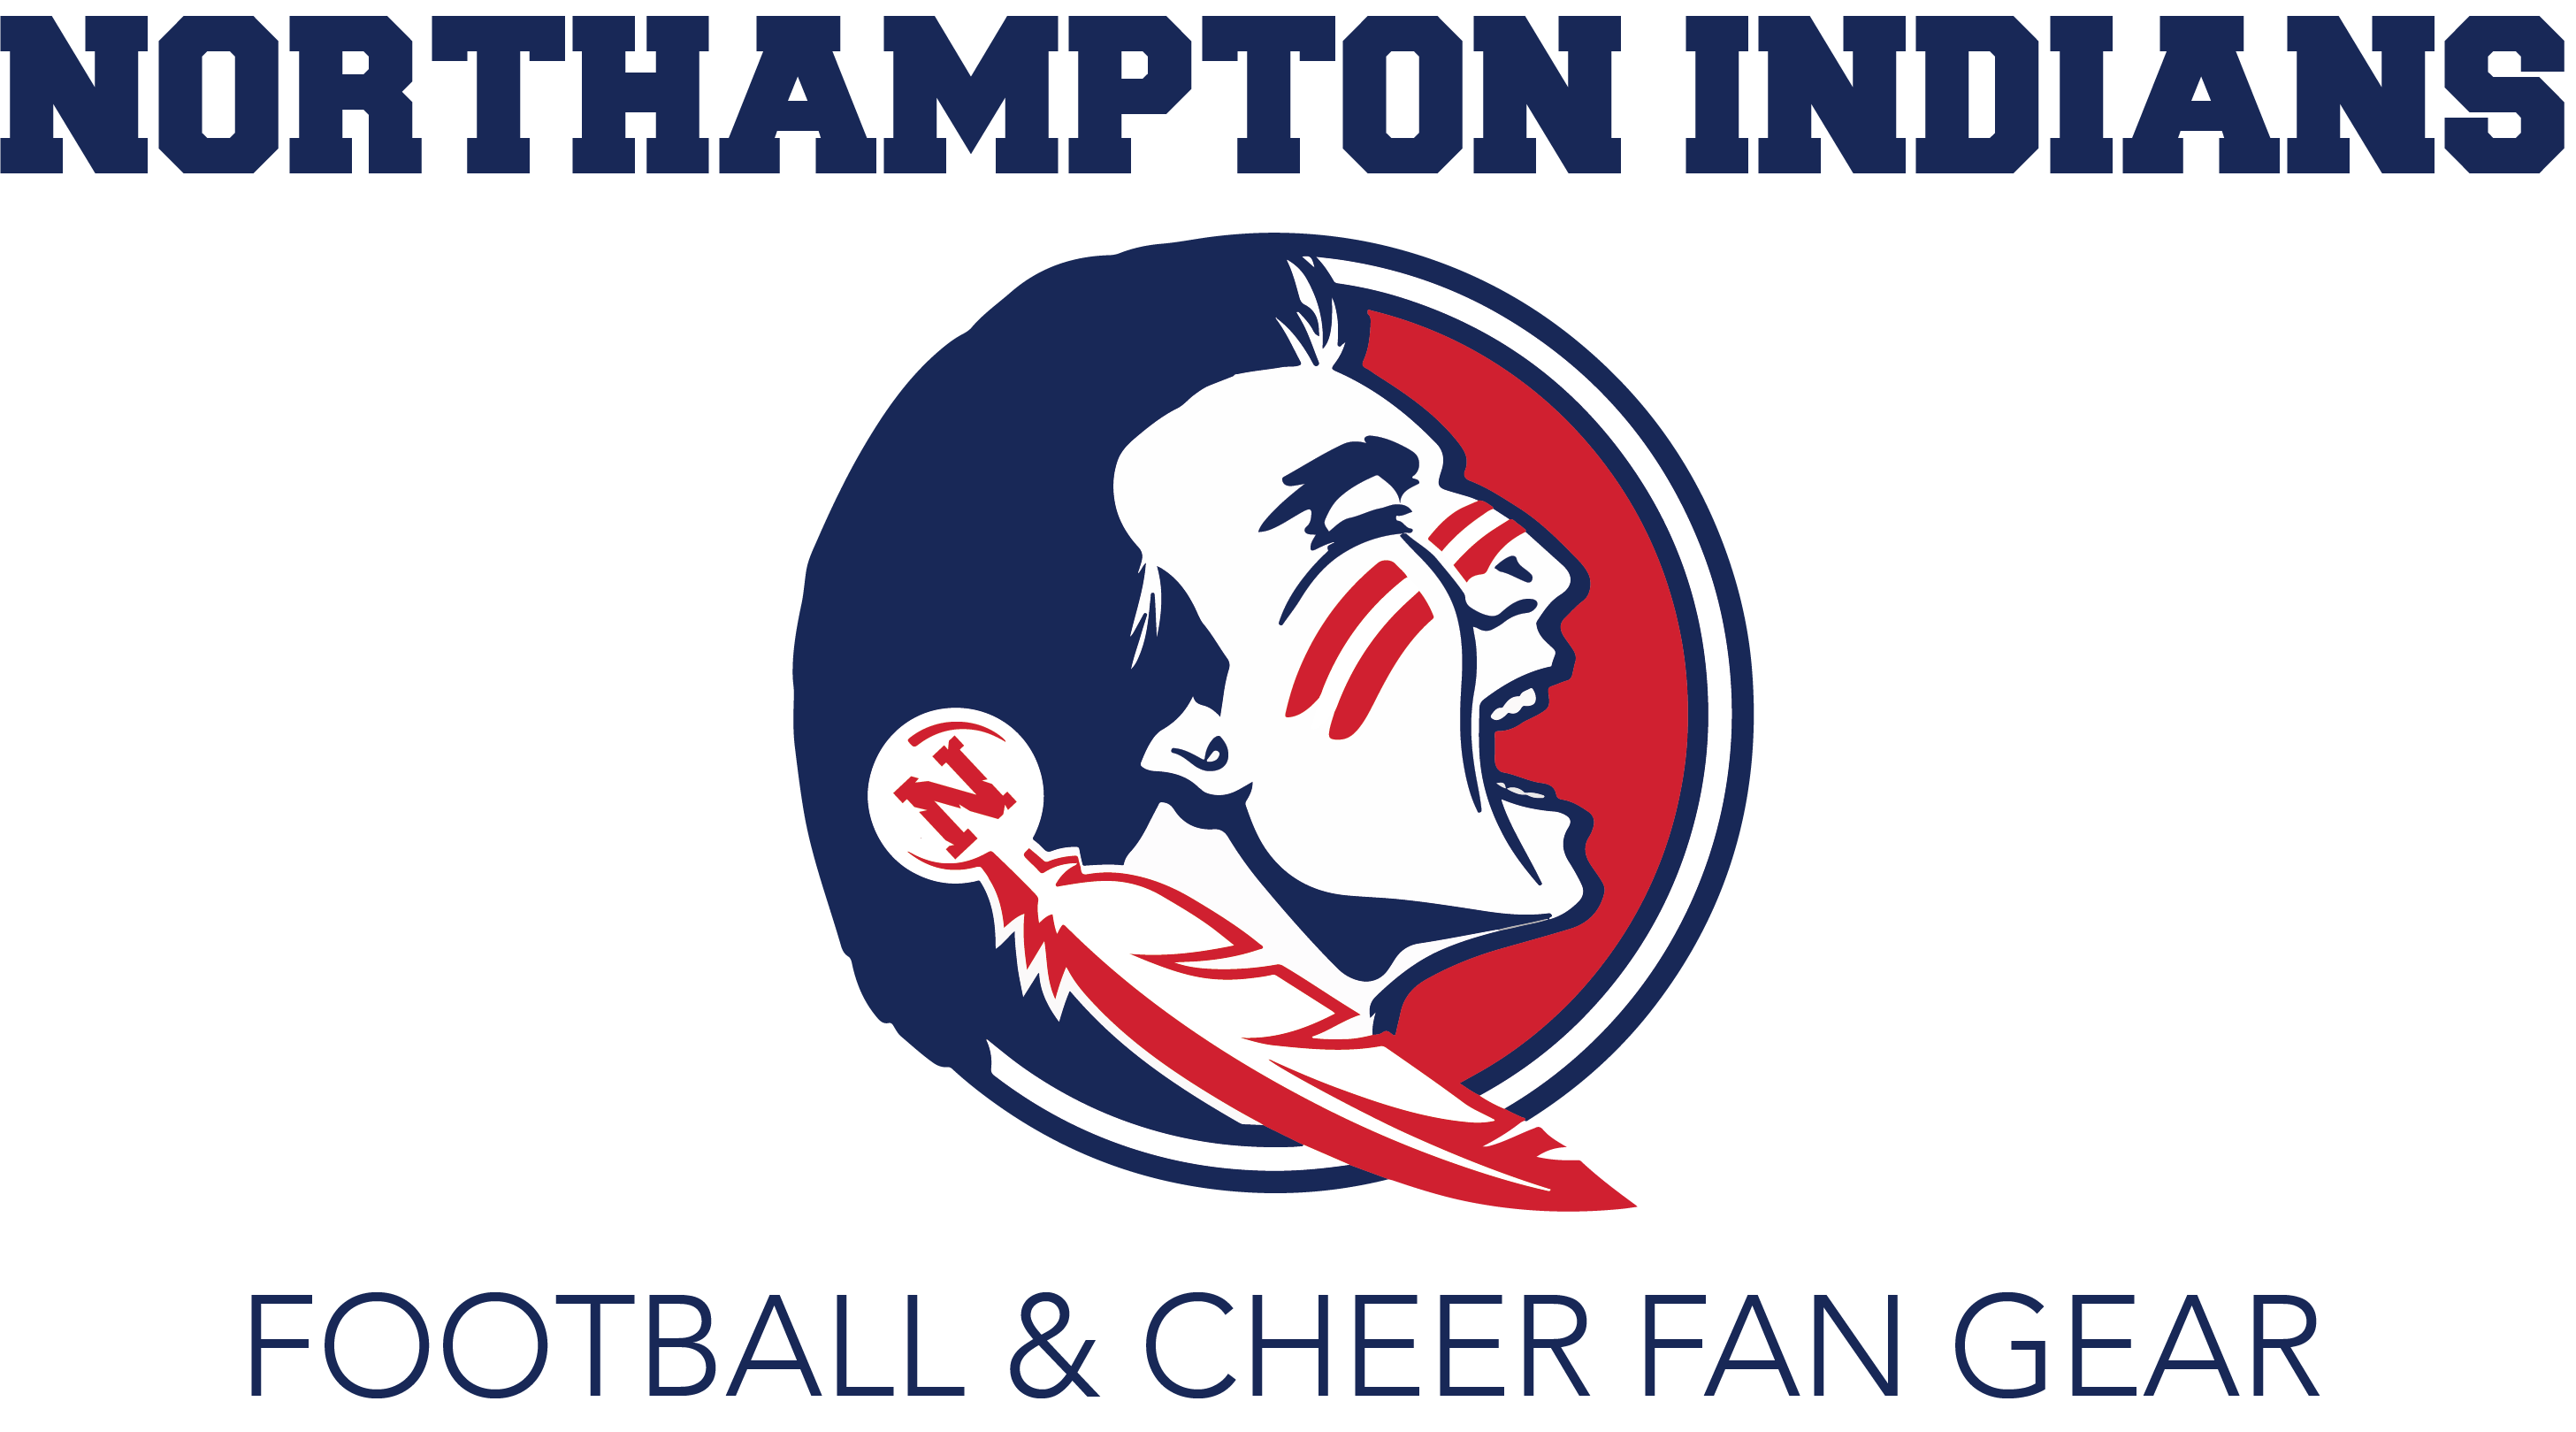 Northampton Indians Football Sublimated Mesh Shirt